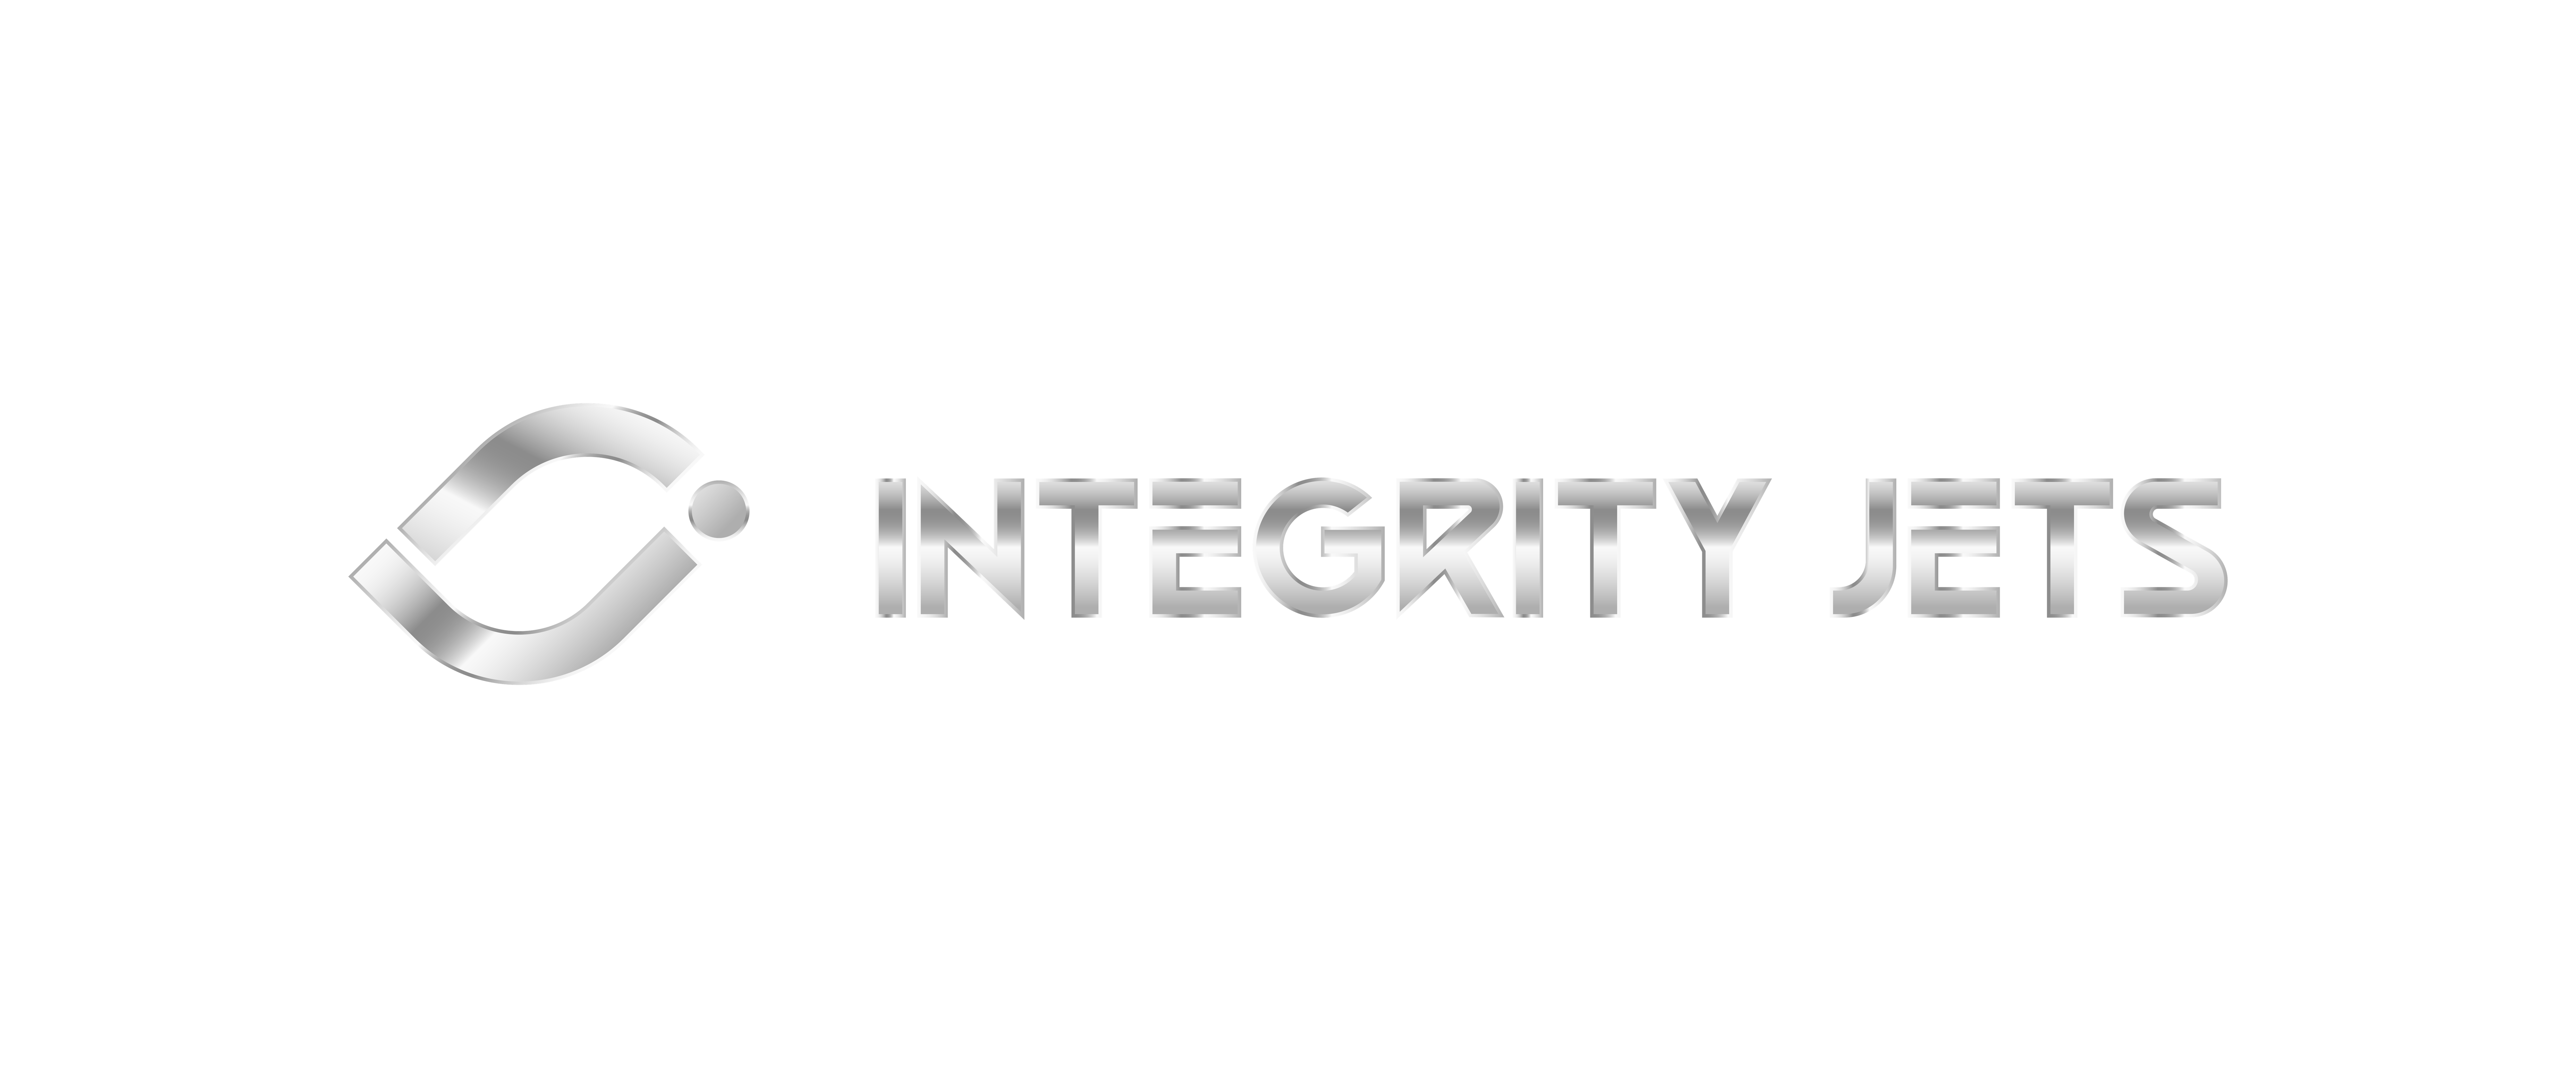 Integrity Jets